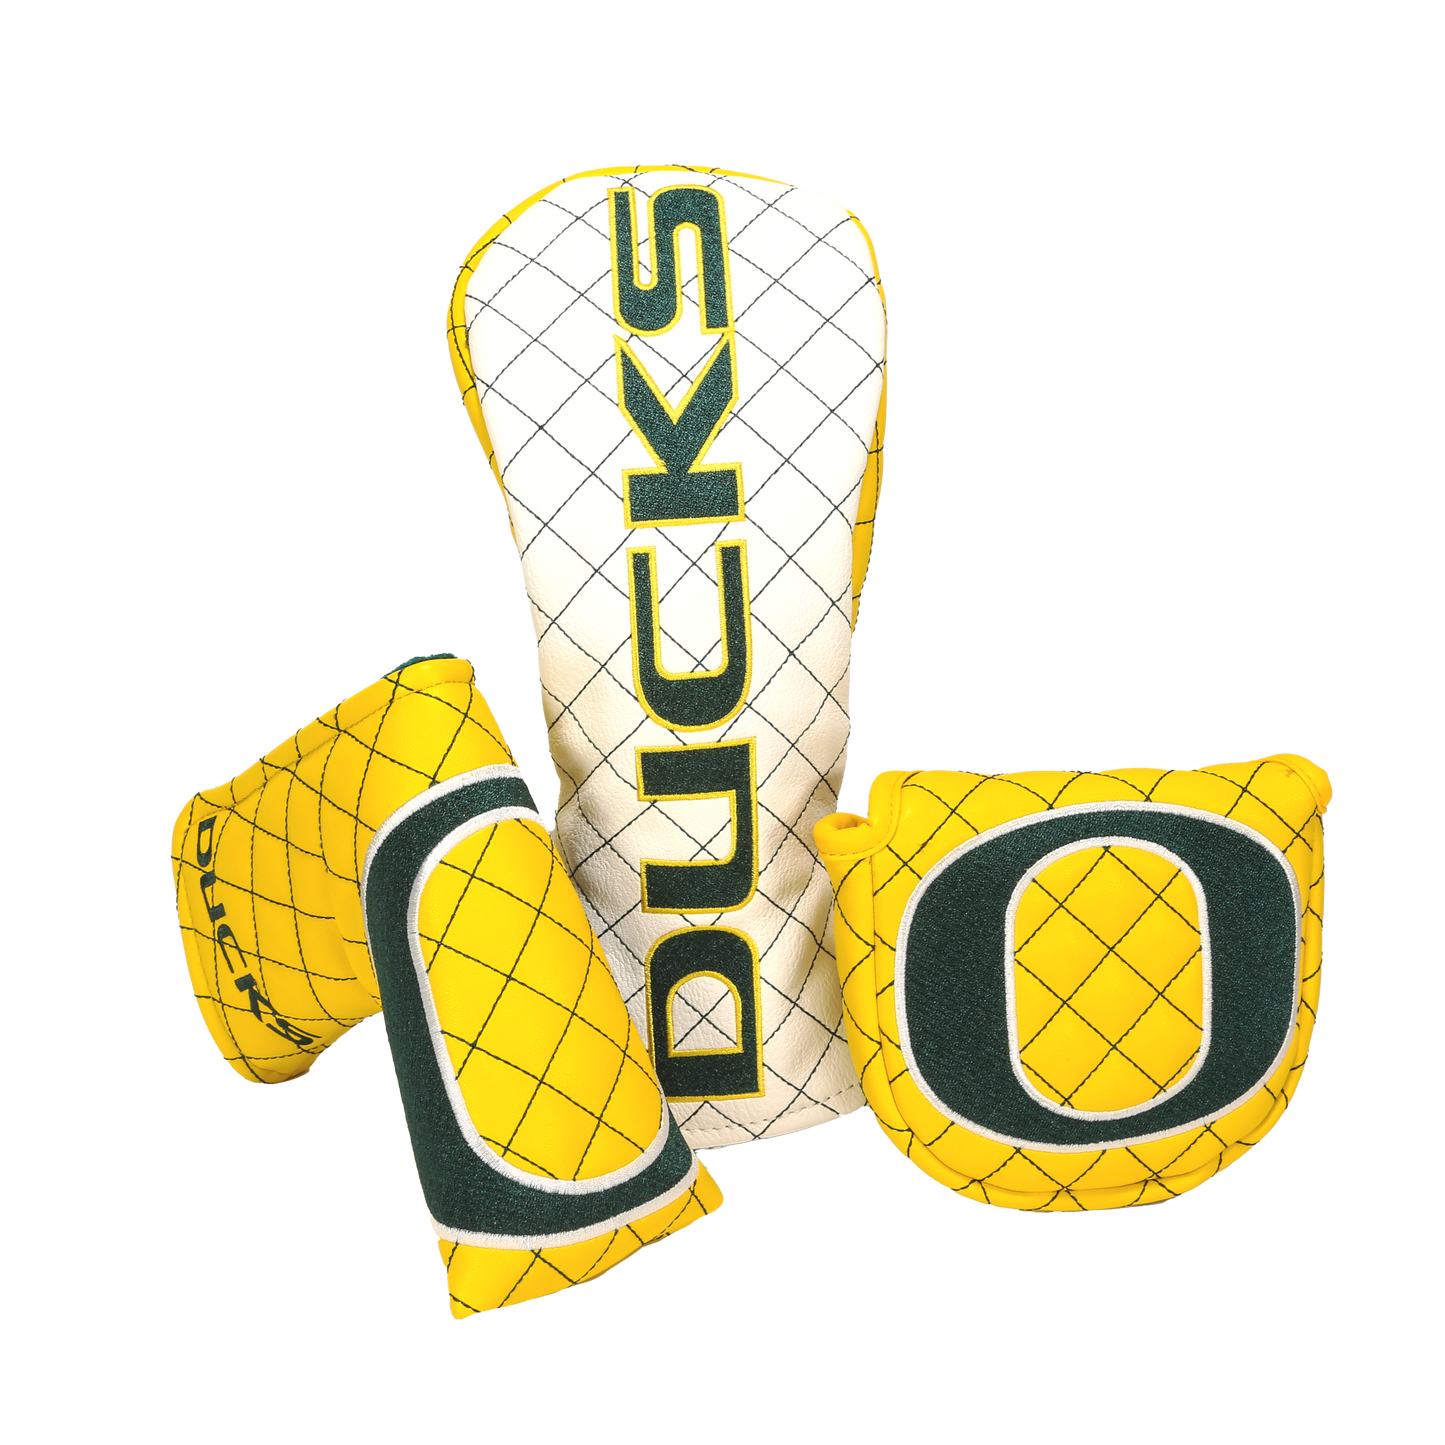 Oregon "Ducks" Blade Putter Cover